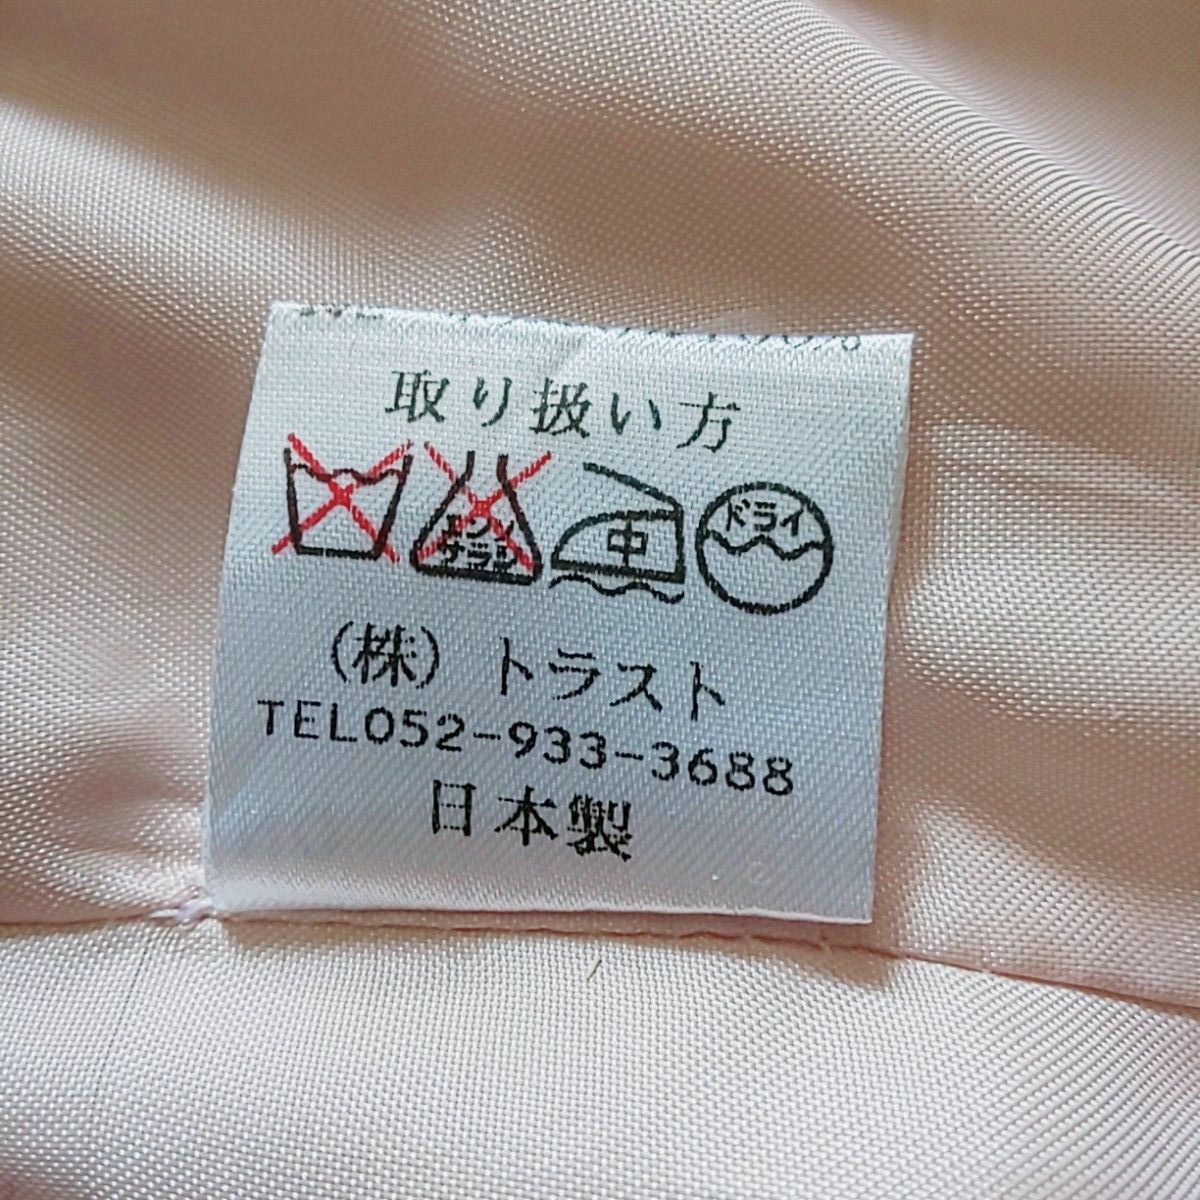 ILC フレアースカート サイズ38 裾シフォン ティアード ピンク 水玉